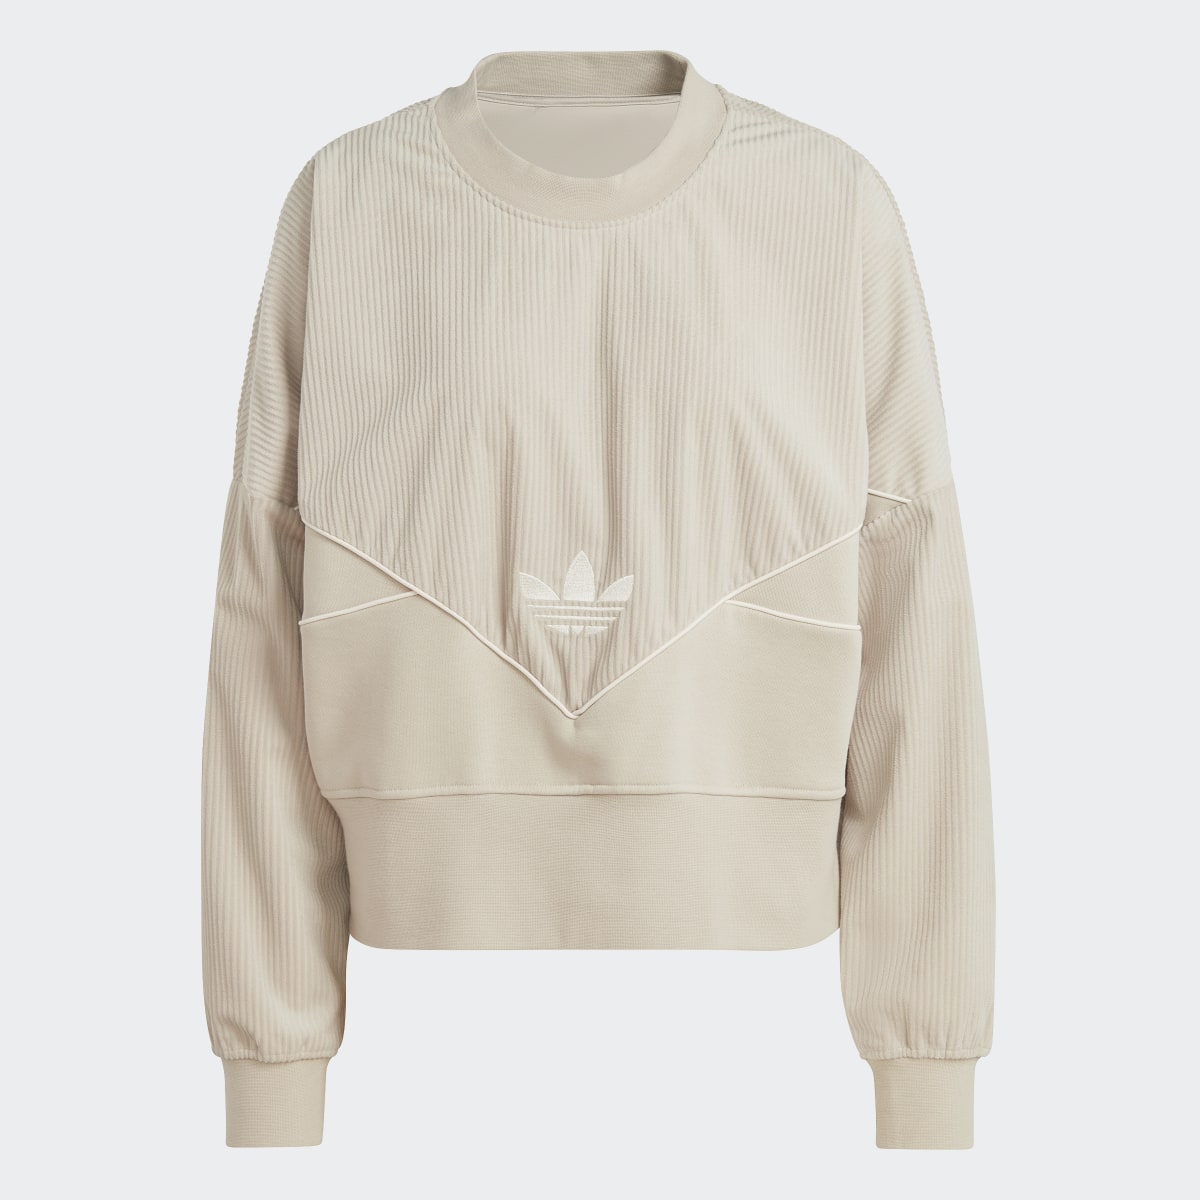 Adidas Corduroy Mix Material Sweatshirt. 5